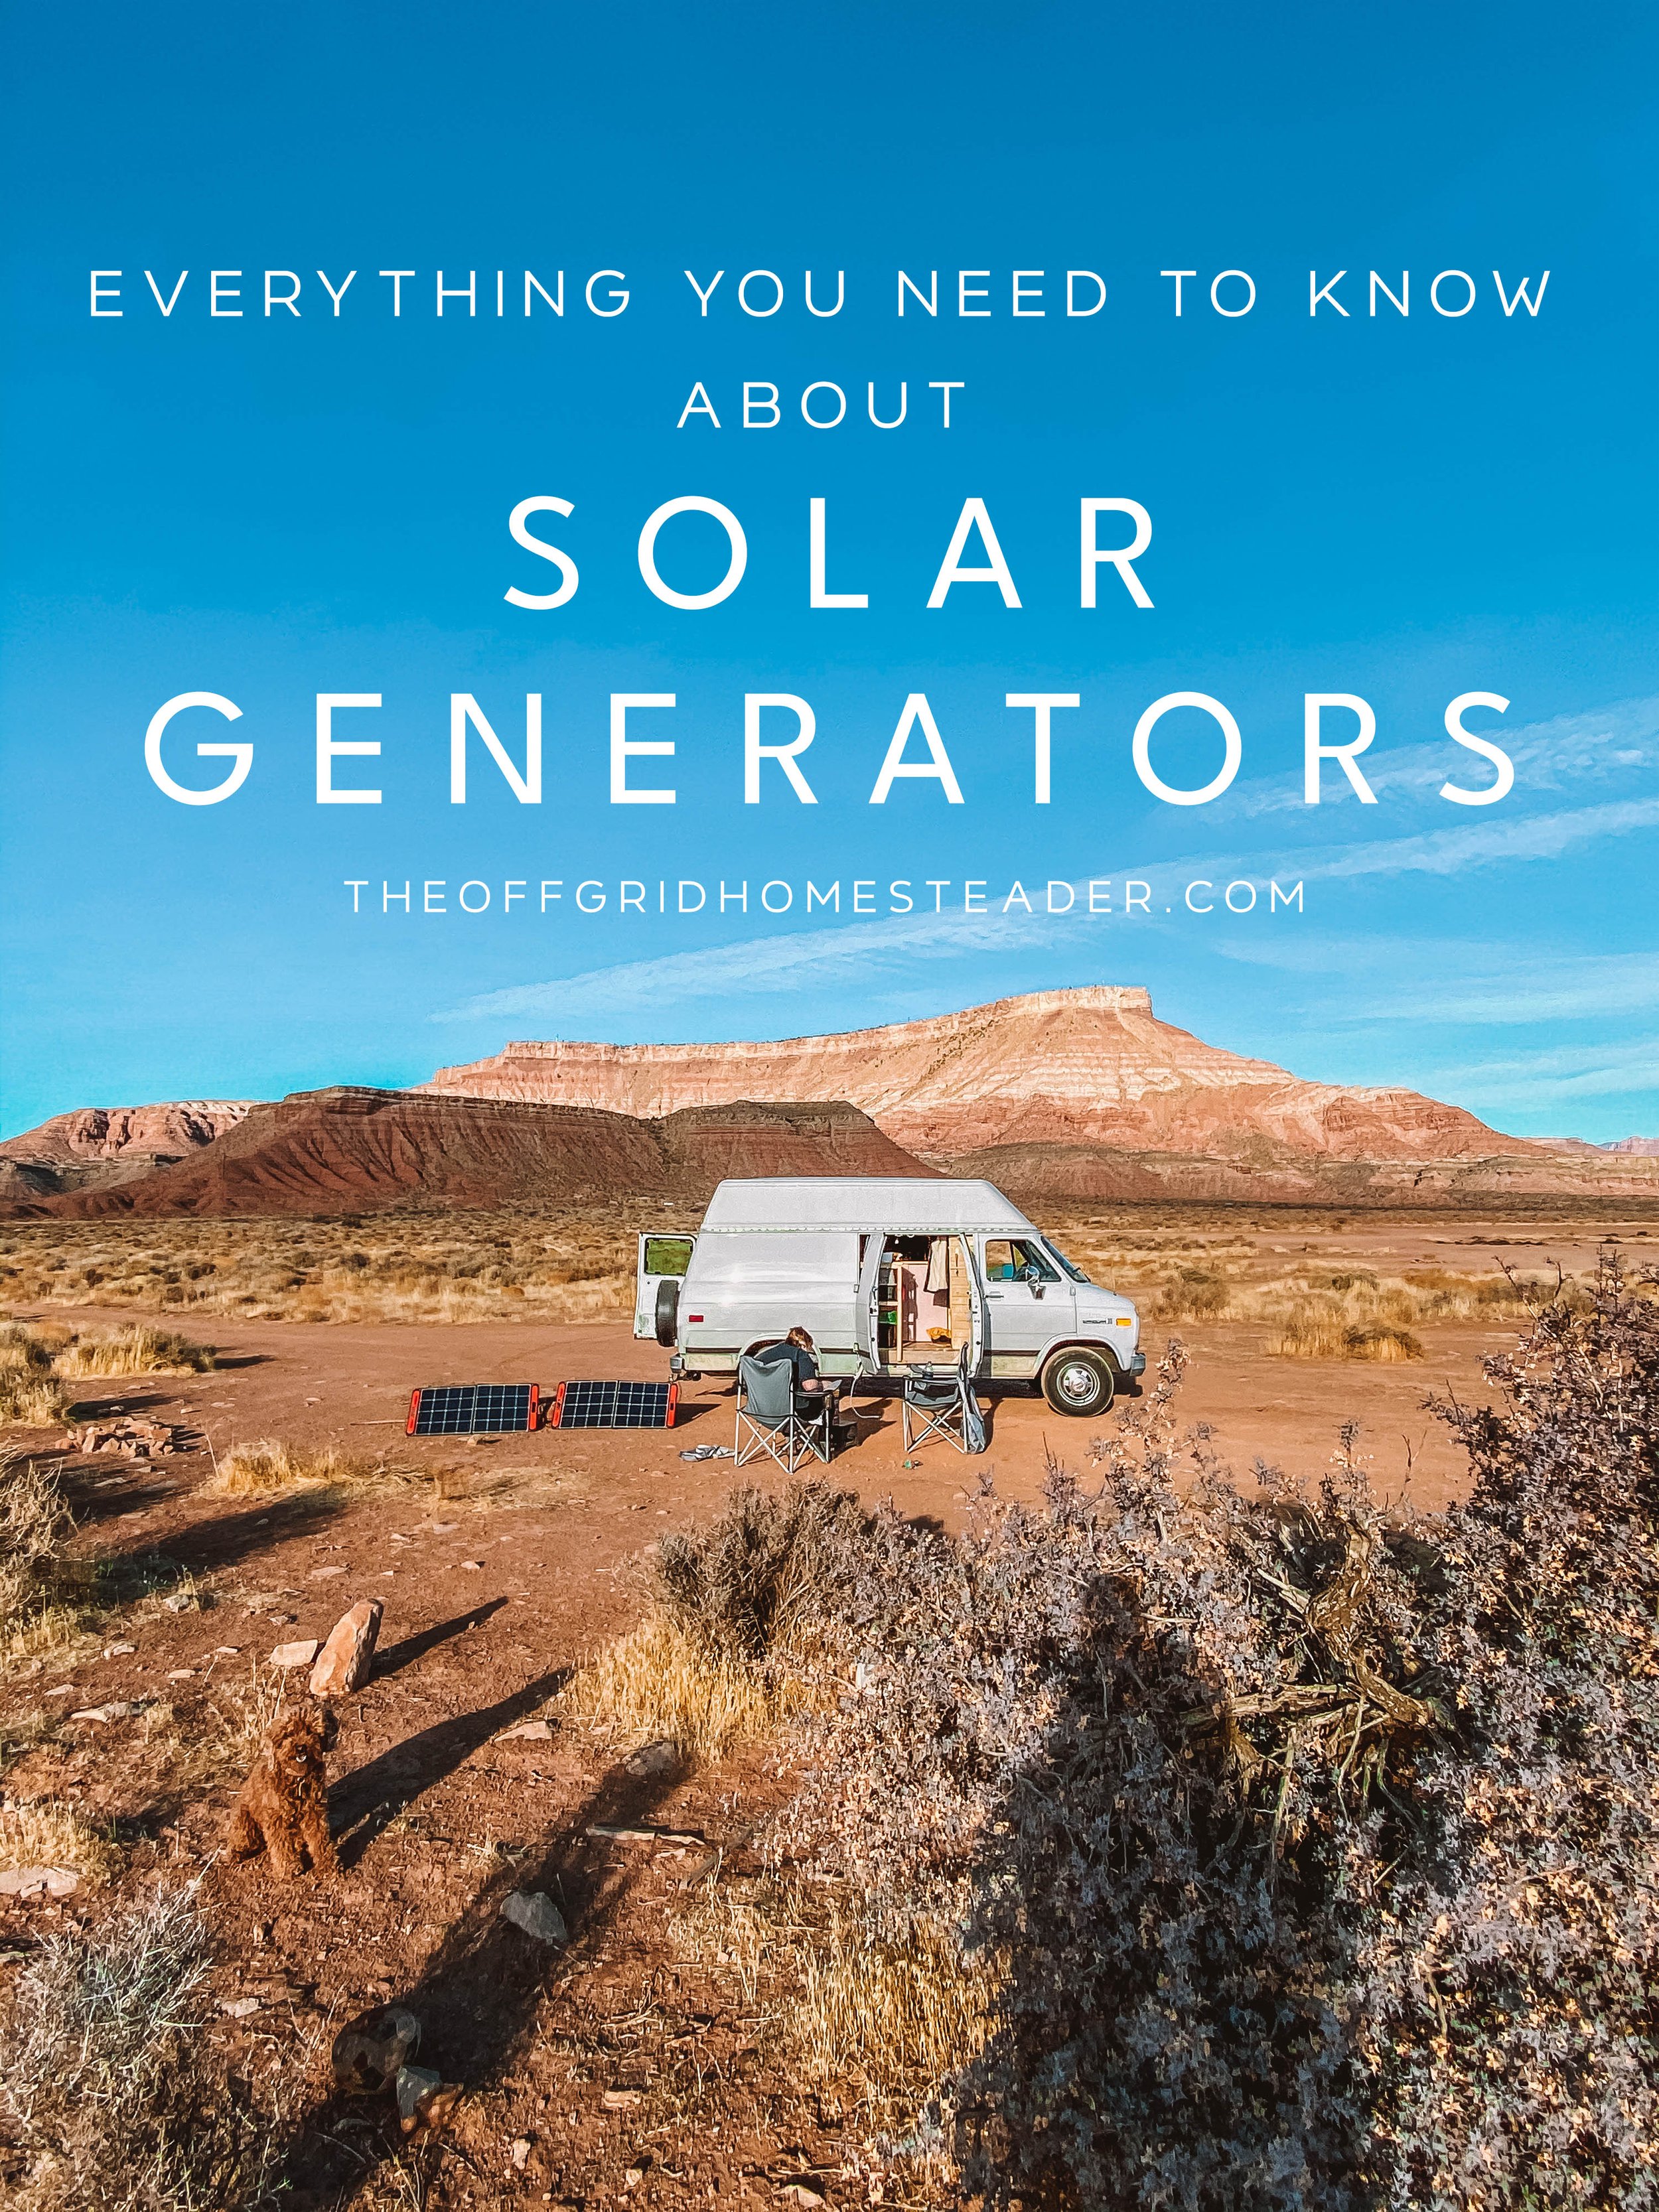 Solar Generators.jpg